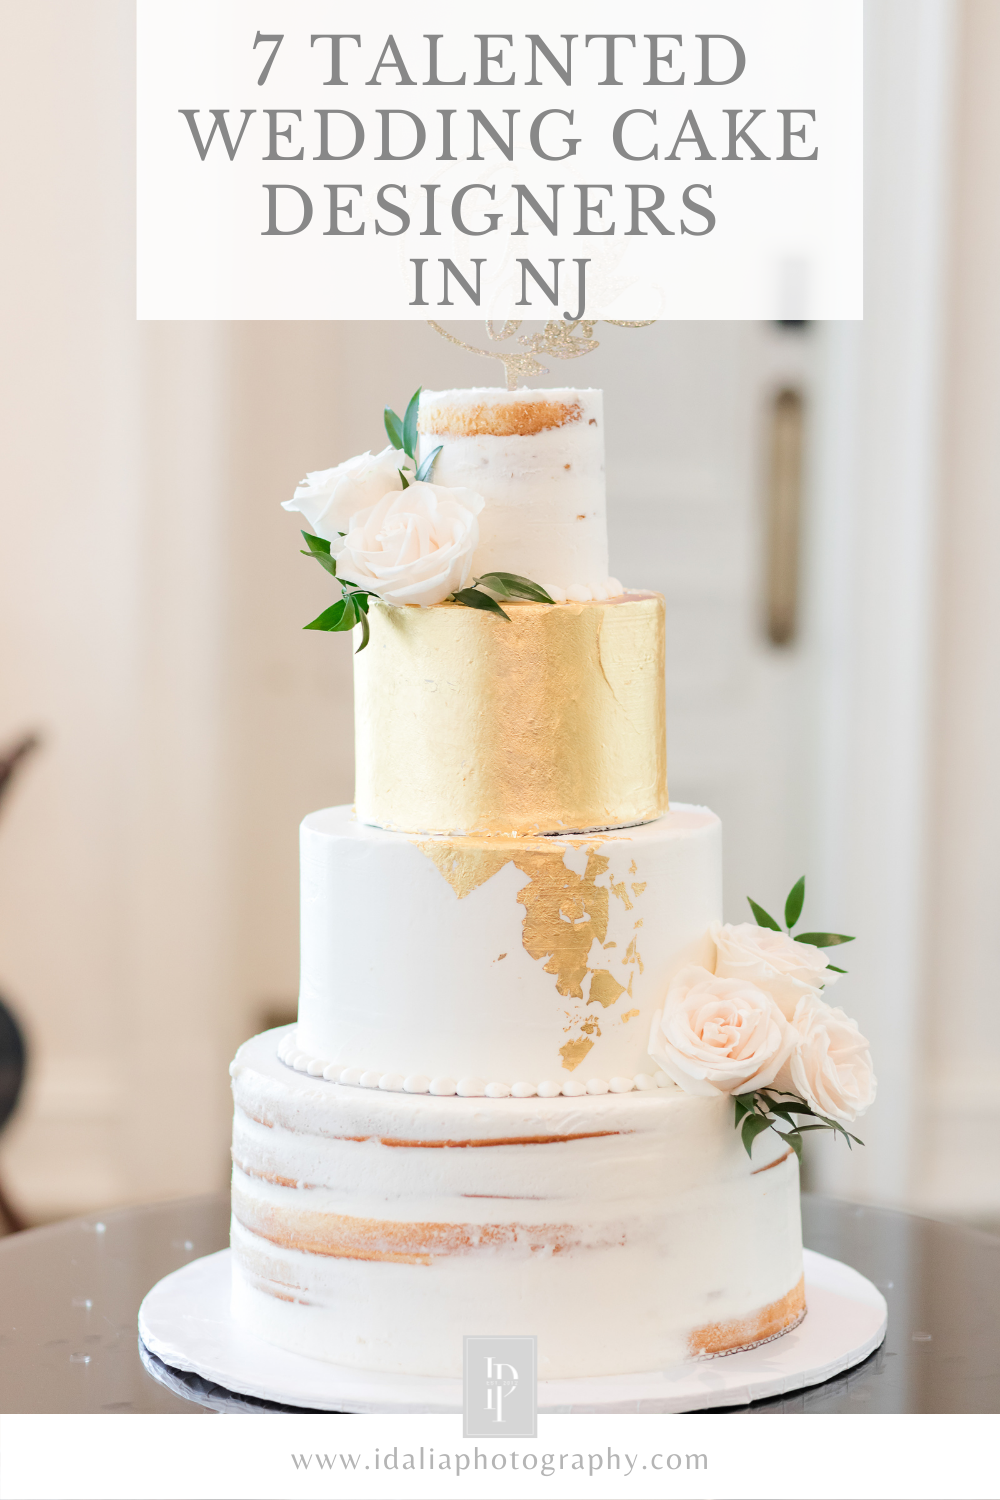 7 Talented Wedding Cake Designers in NJ